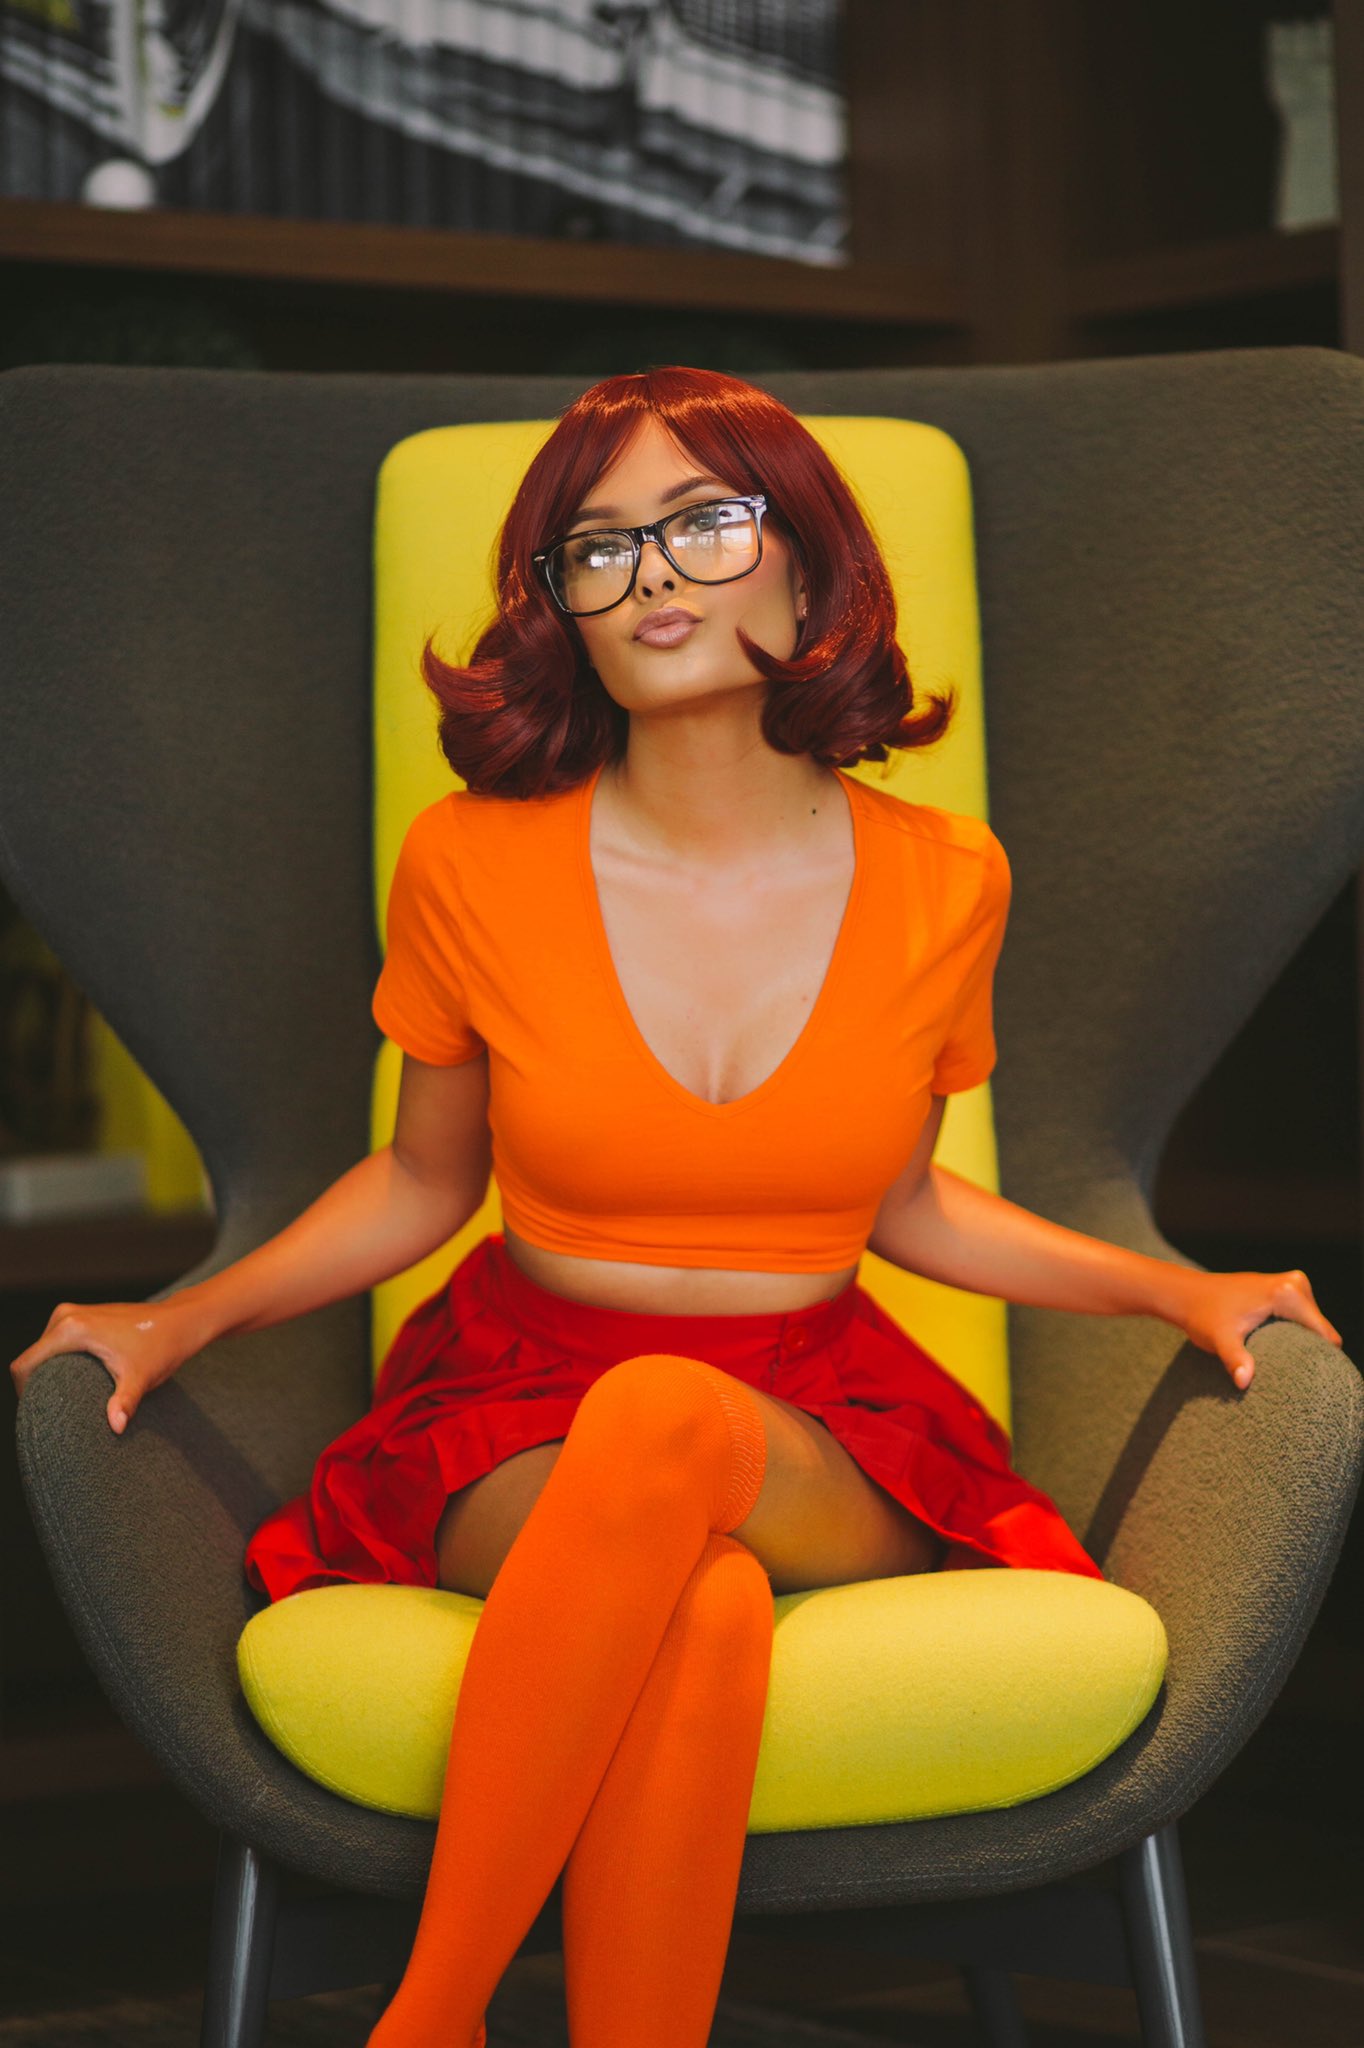 Velma joanie brosas 